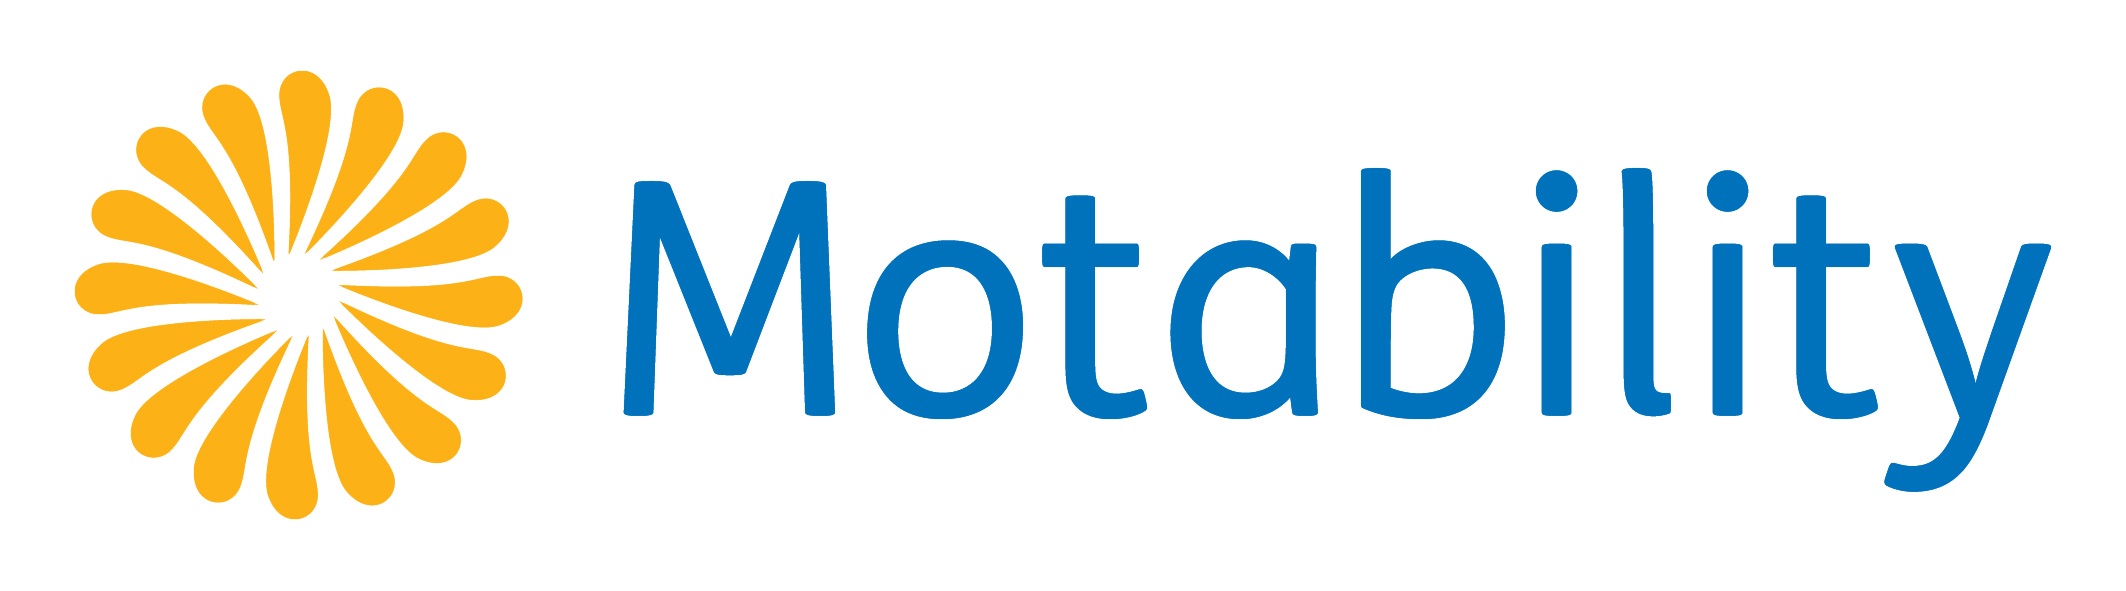 Motability logo 